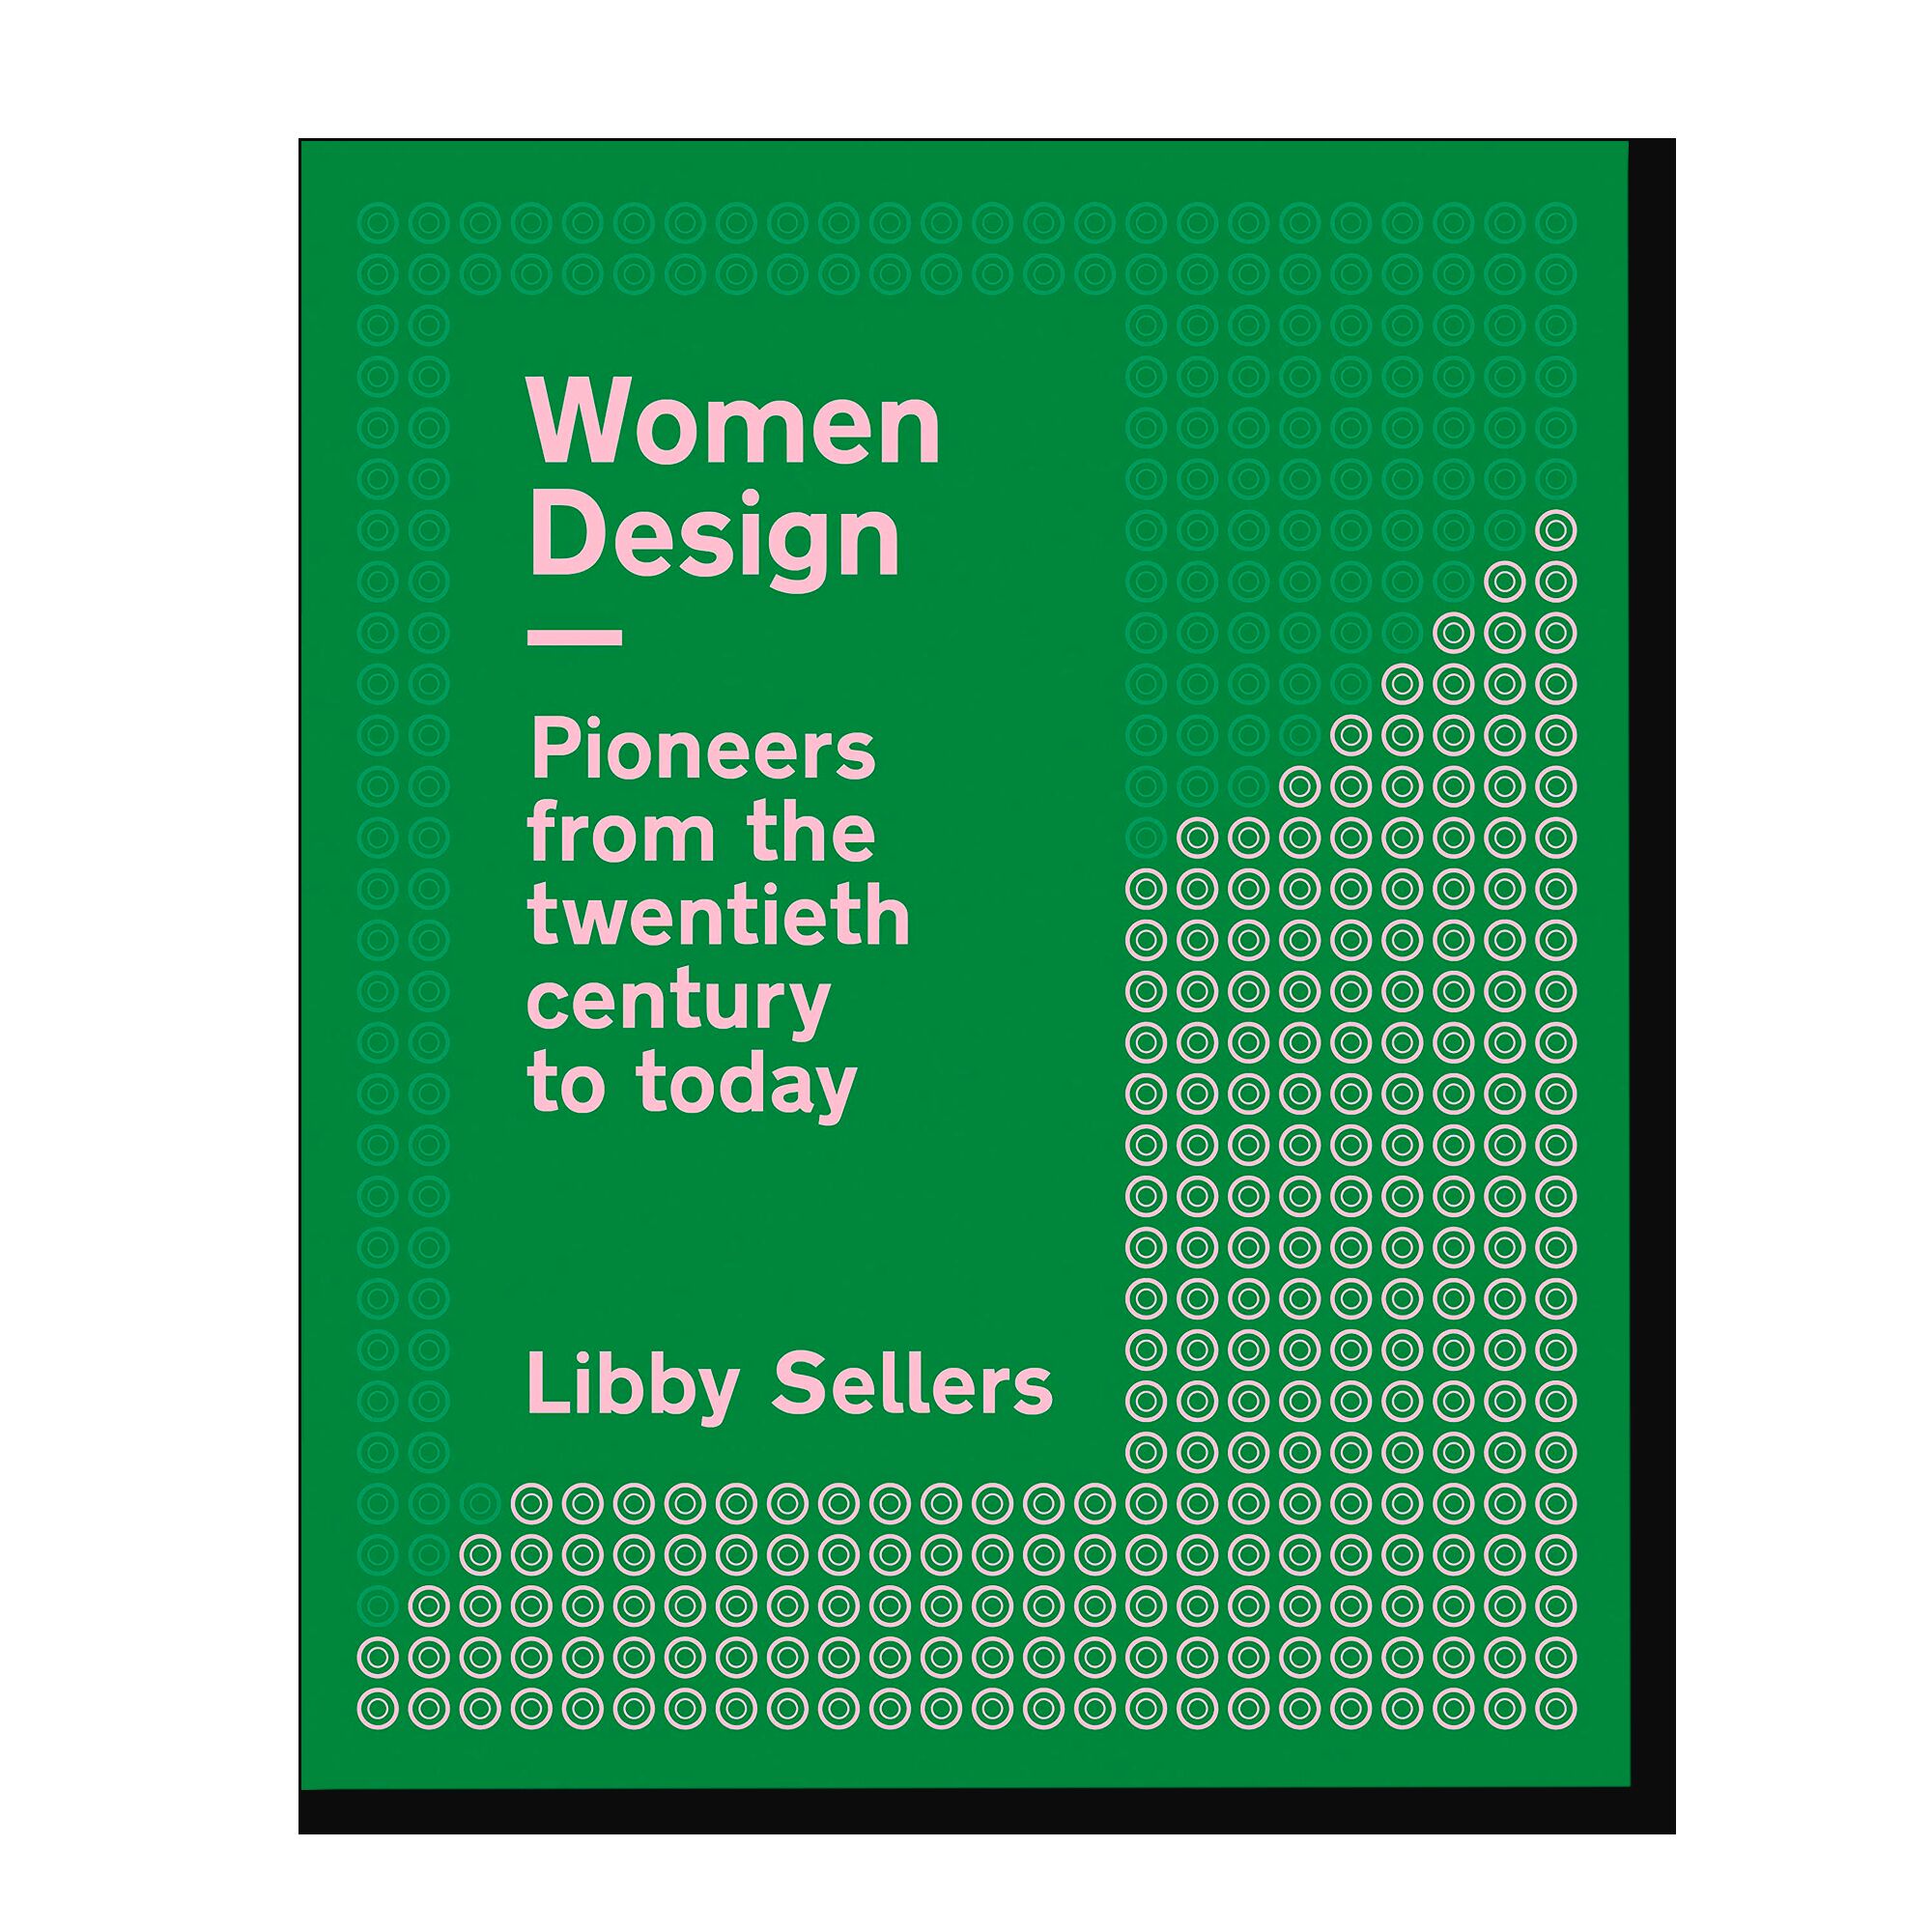 Women Design: Pioneers from the twentieth century to today